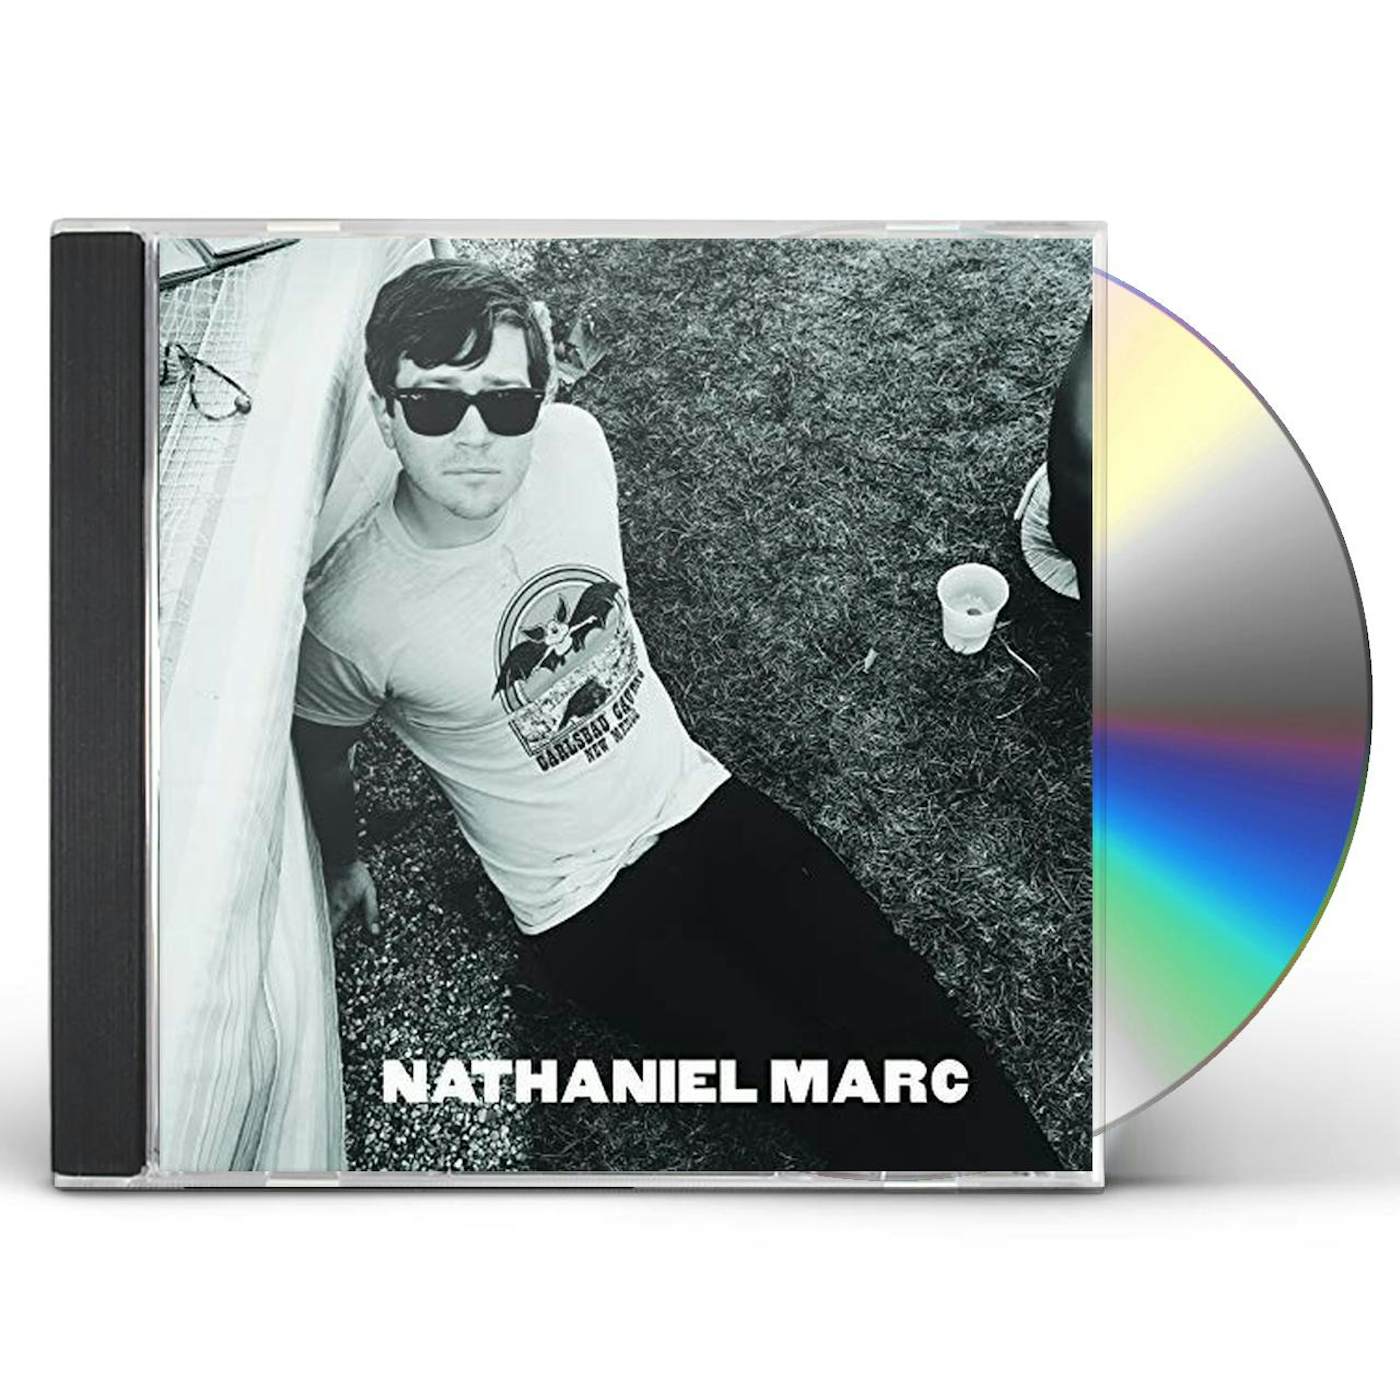 Tango Alpha Tango NATHANIEL MARC CD